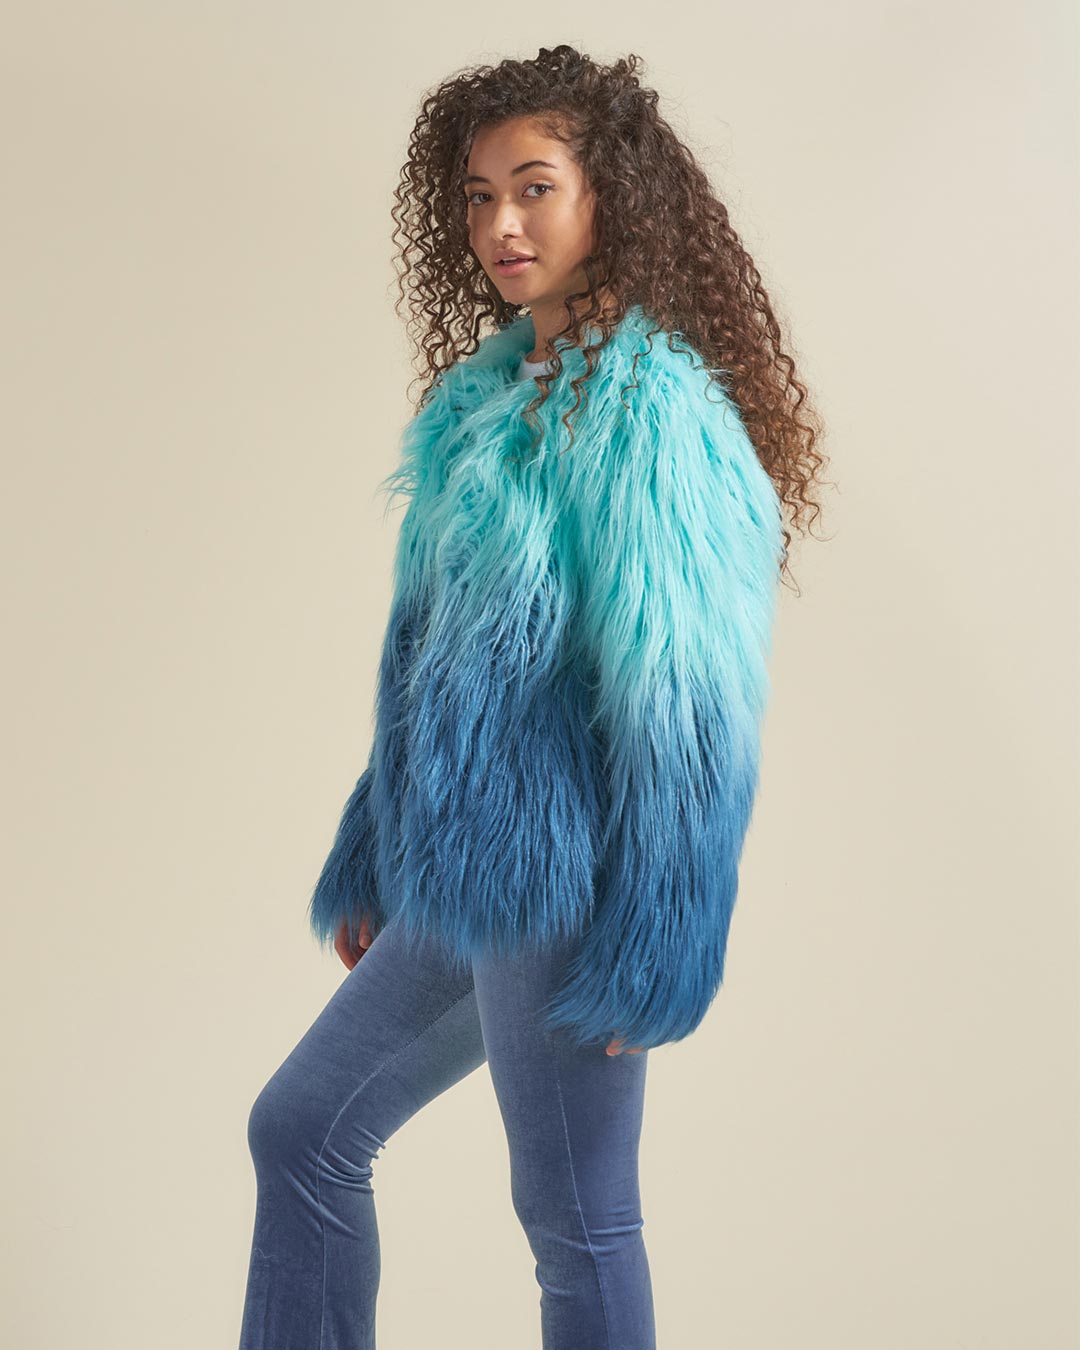 Blue and Teal Sea Alpaca Faux Fur Bomber Jacket on Female